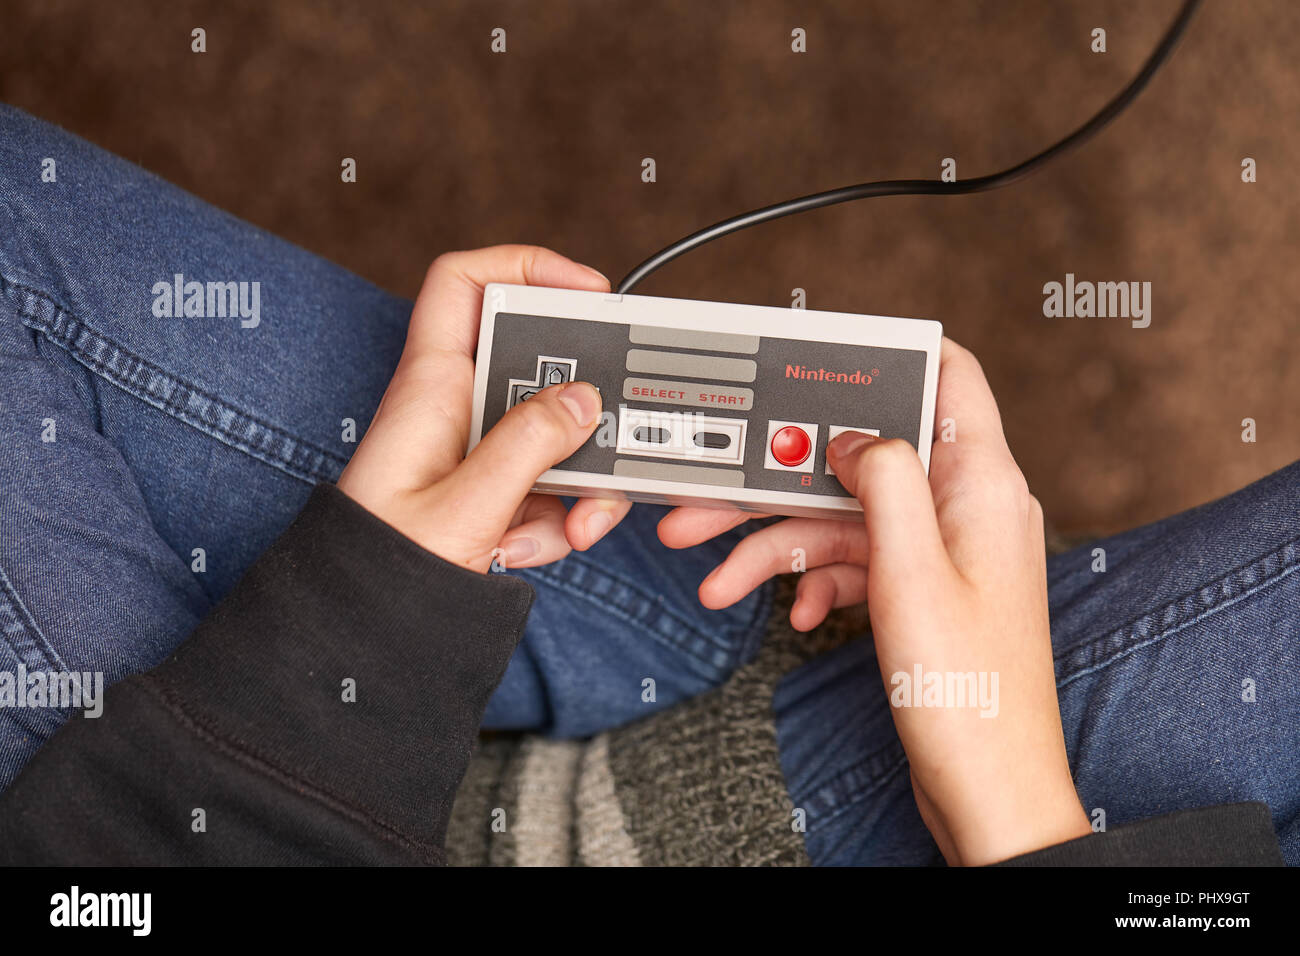 Nintengo NES,playing Super Mario 3 Stock Photo